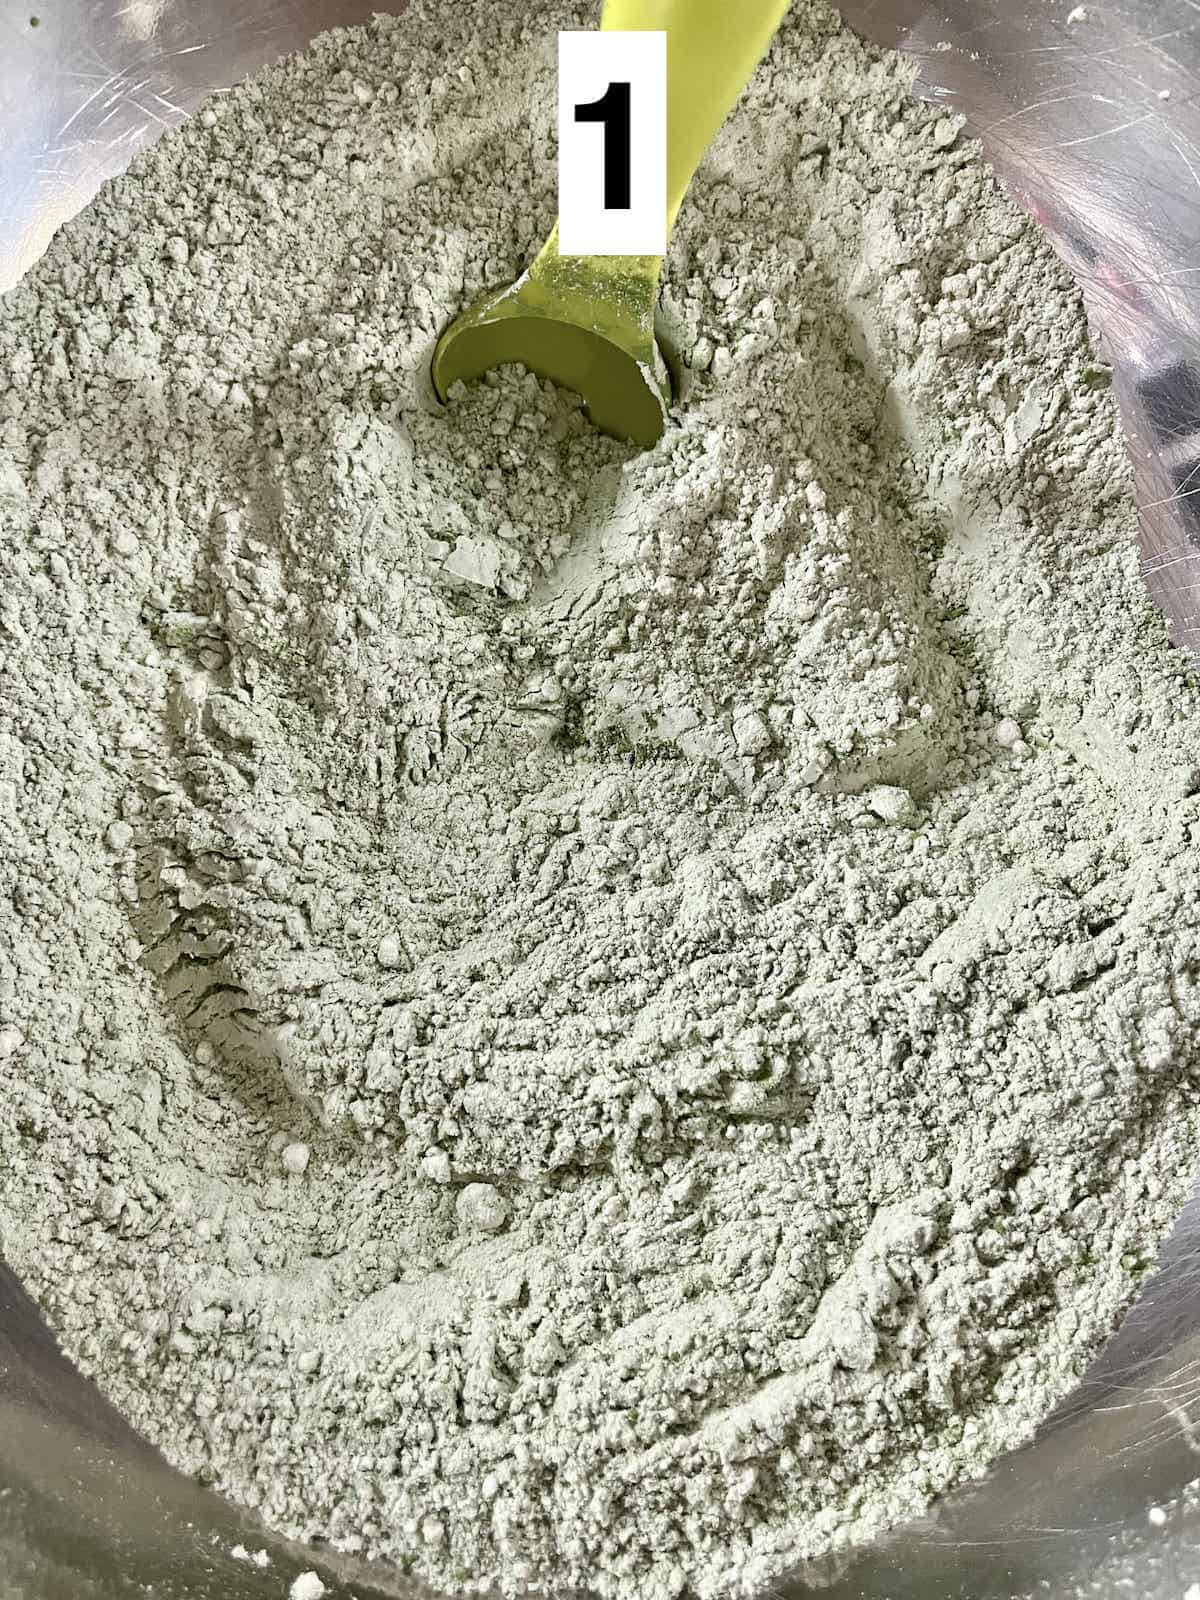 A bowl of matcha green tea powder mixed with white flour.